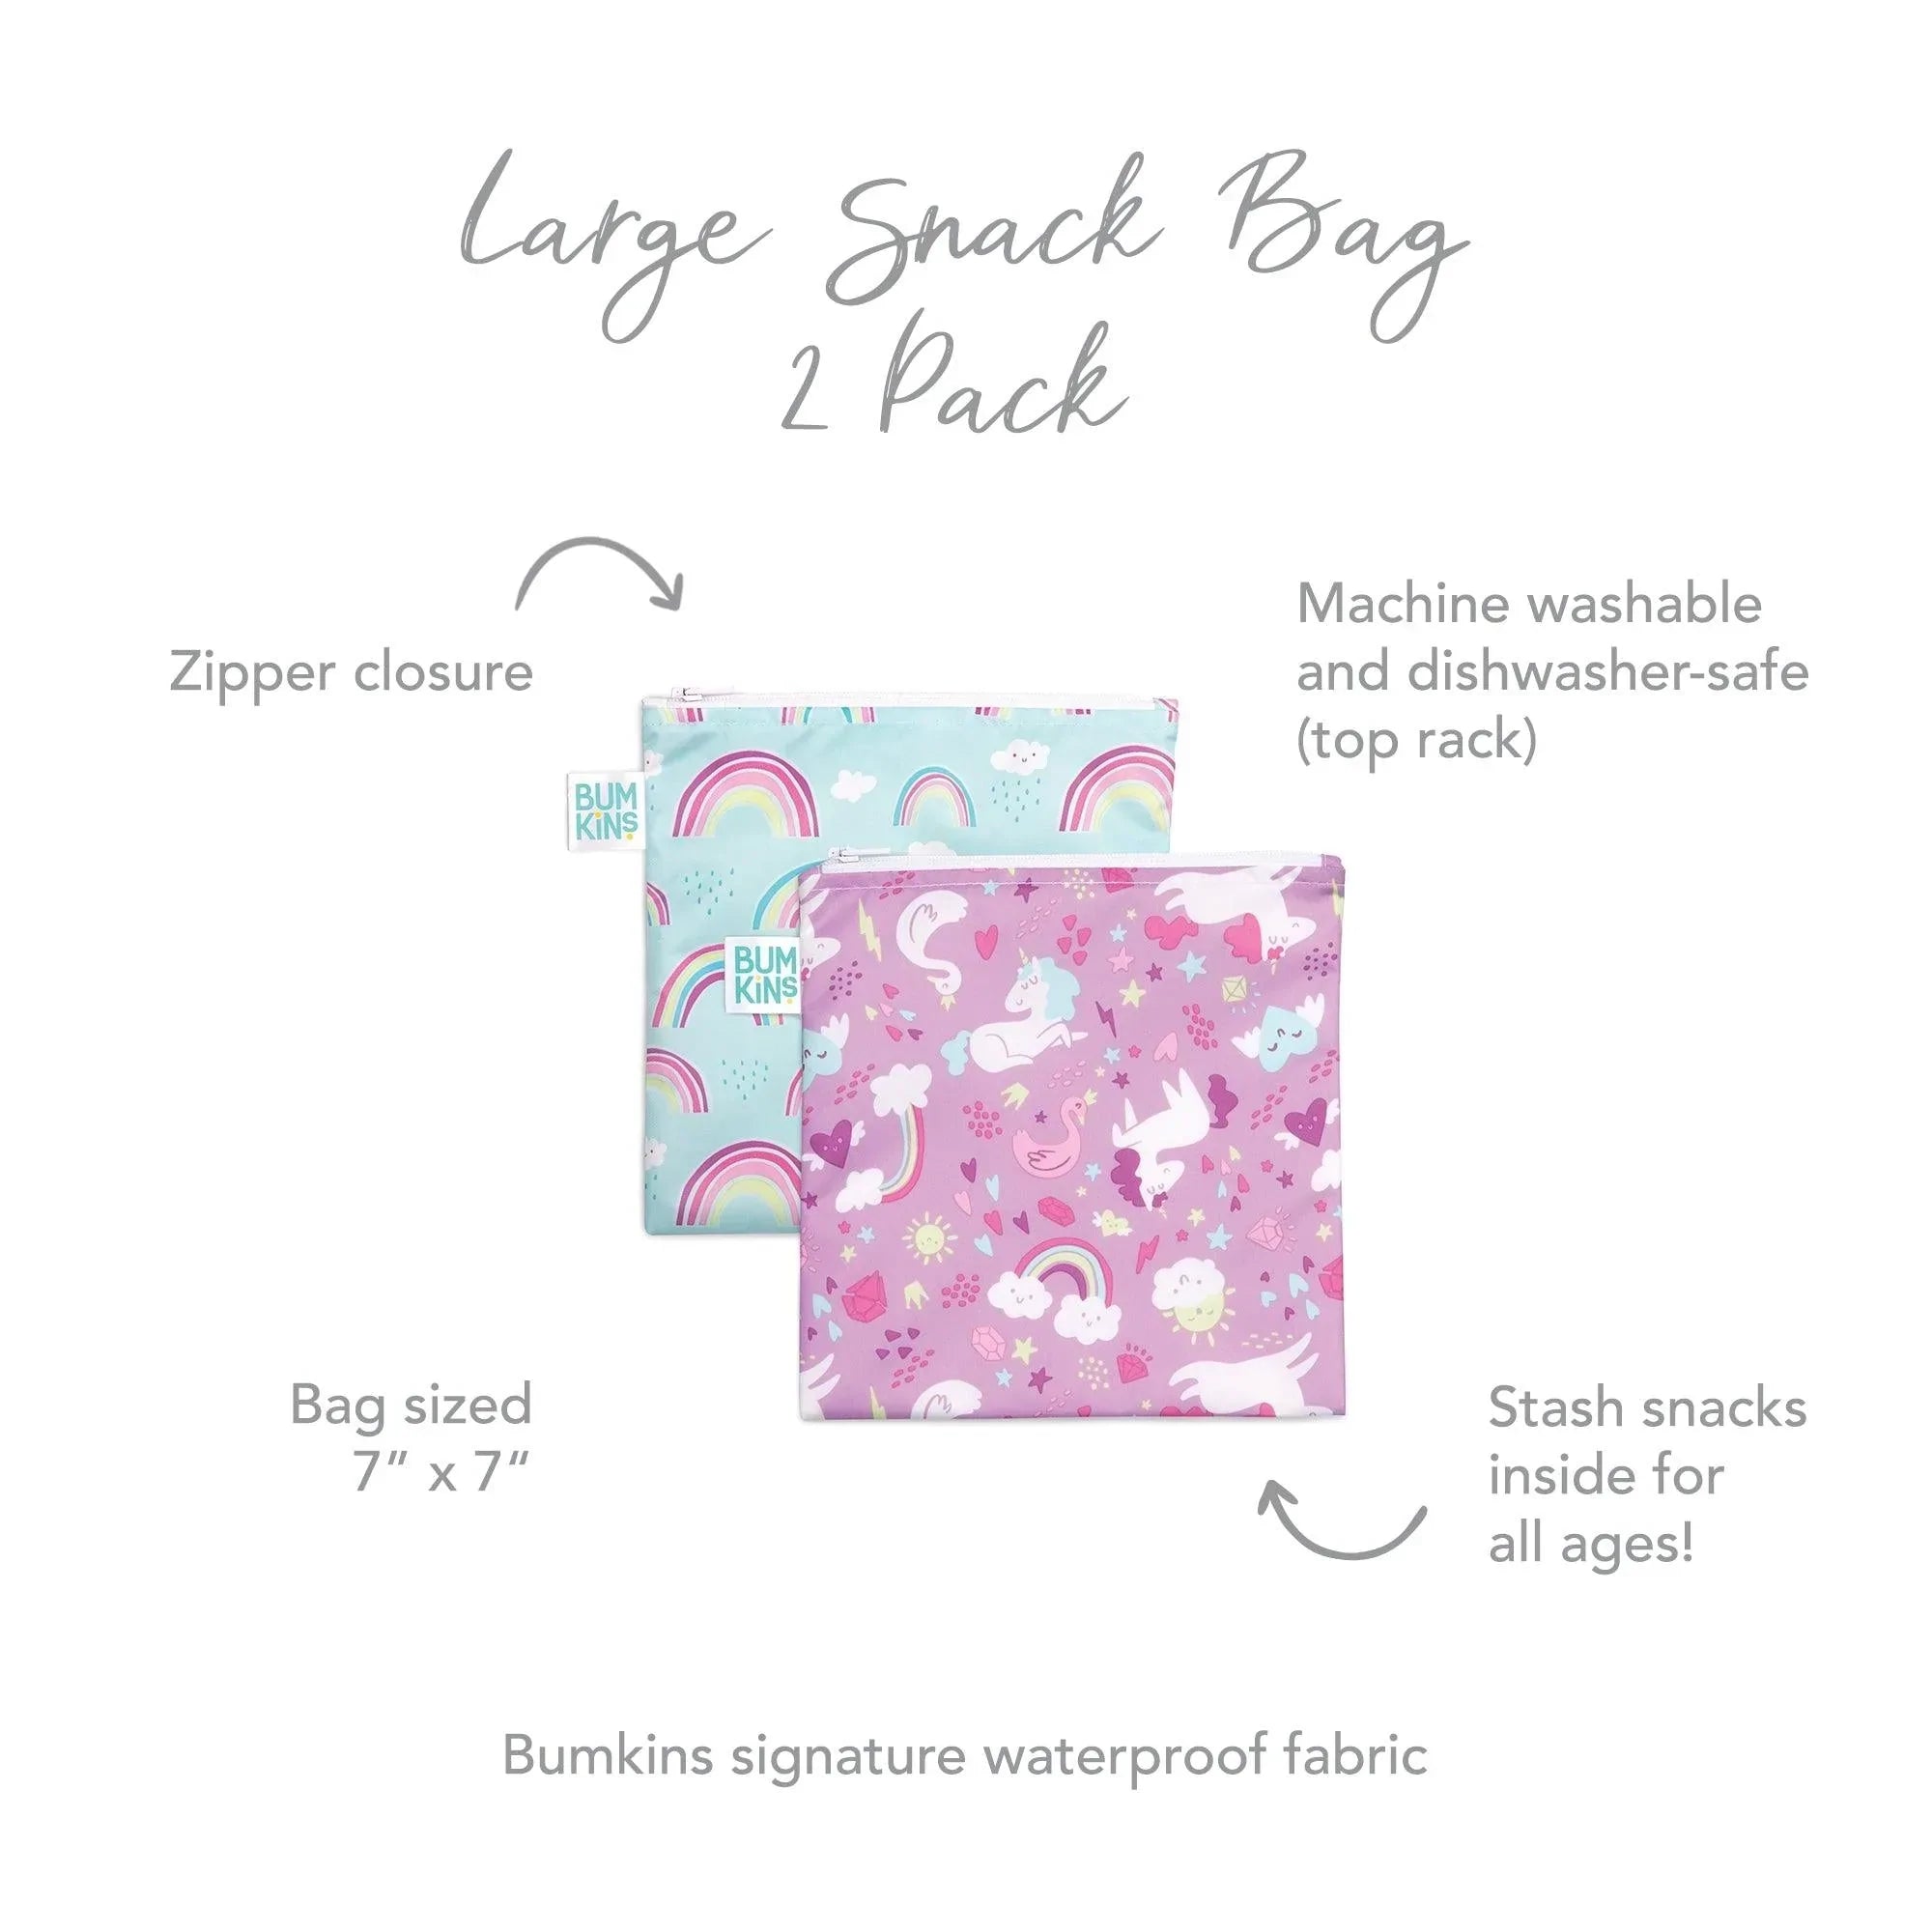 Bumkins Reusable Snack Bag Large 2-pack